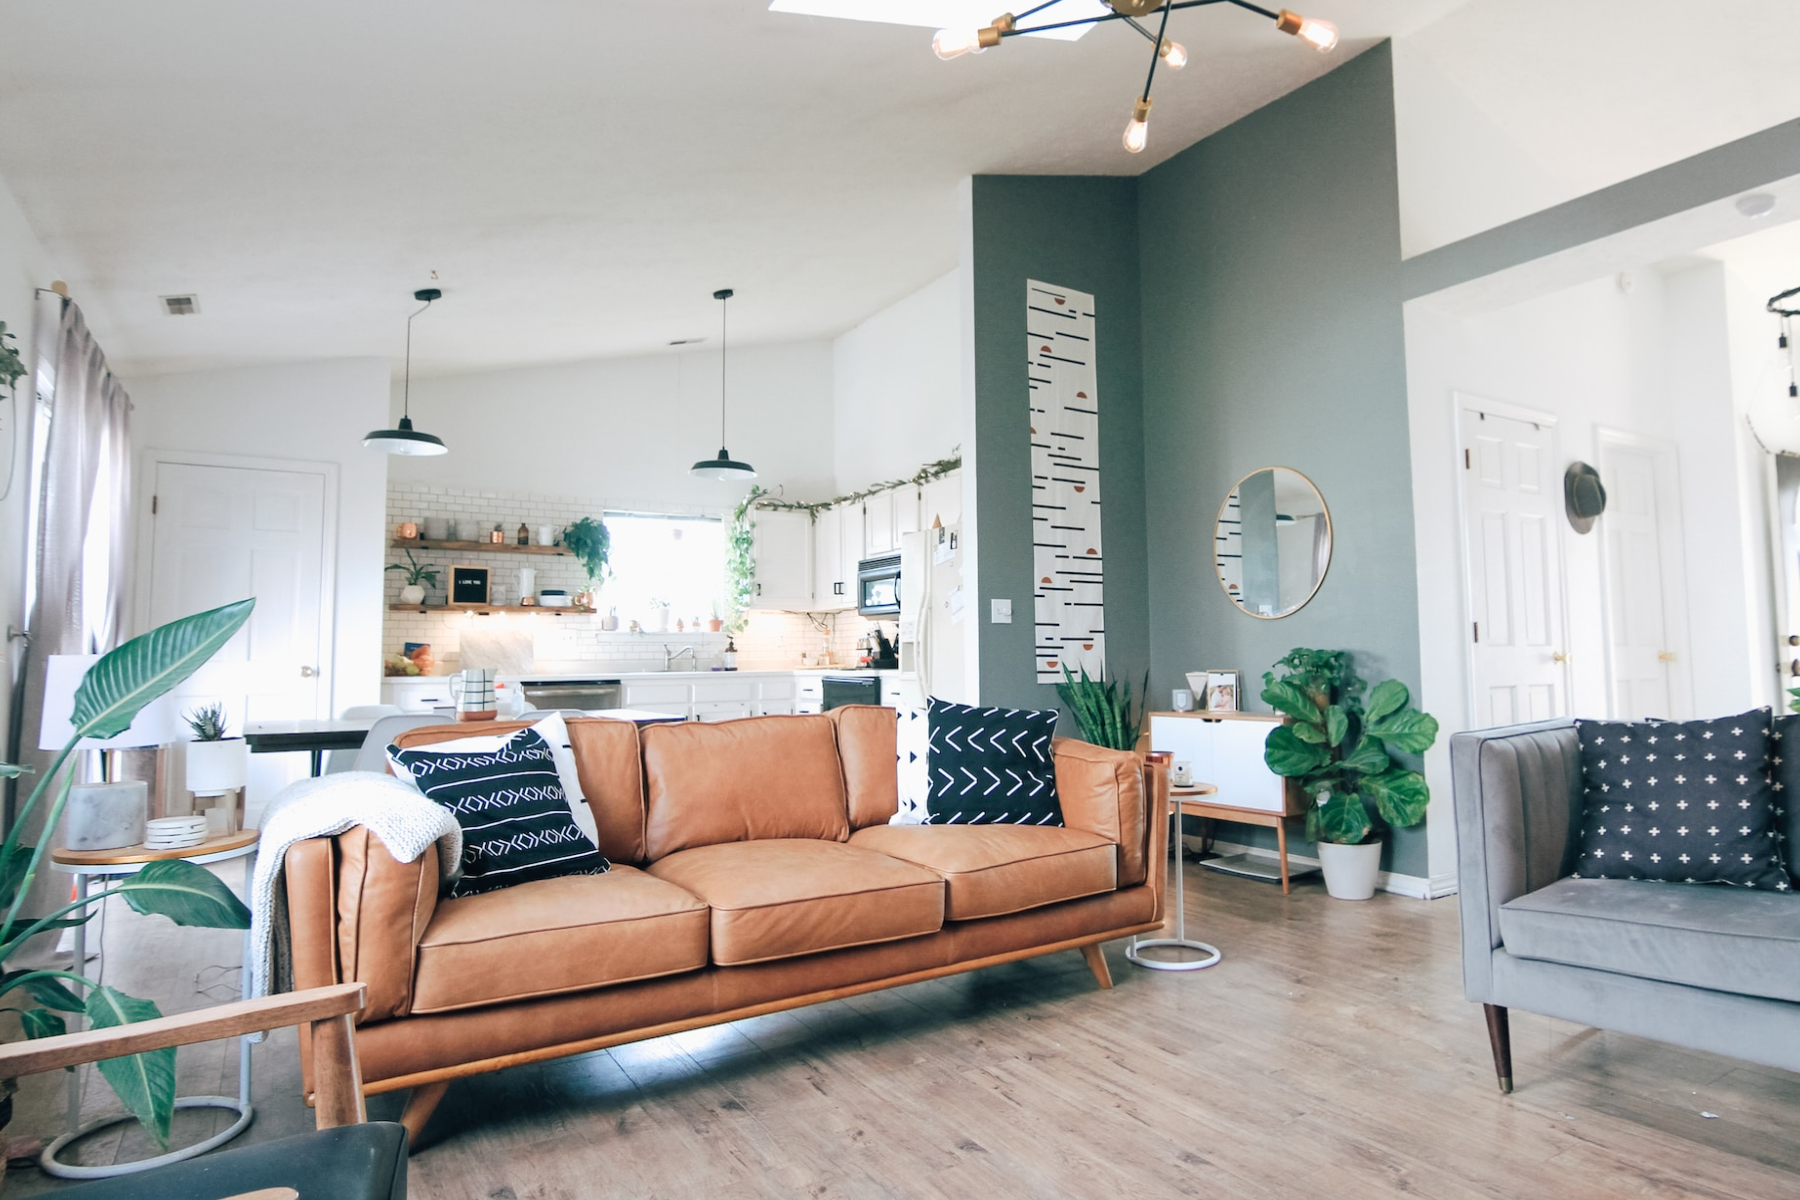 A more spacious interior design for an apartment's living room